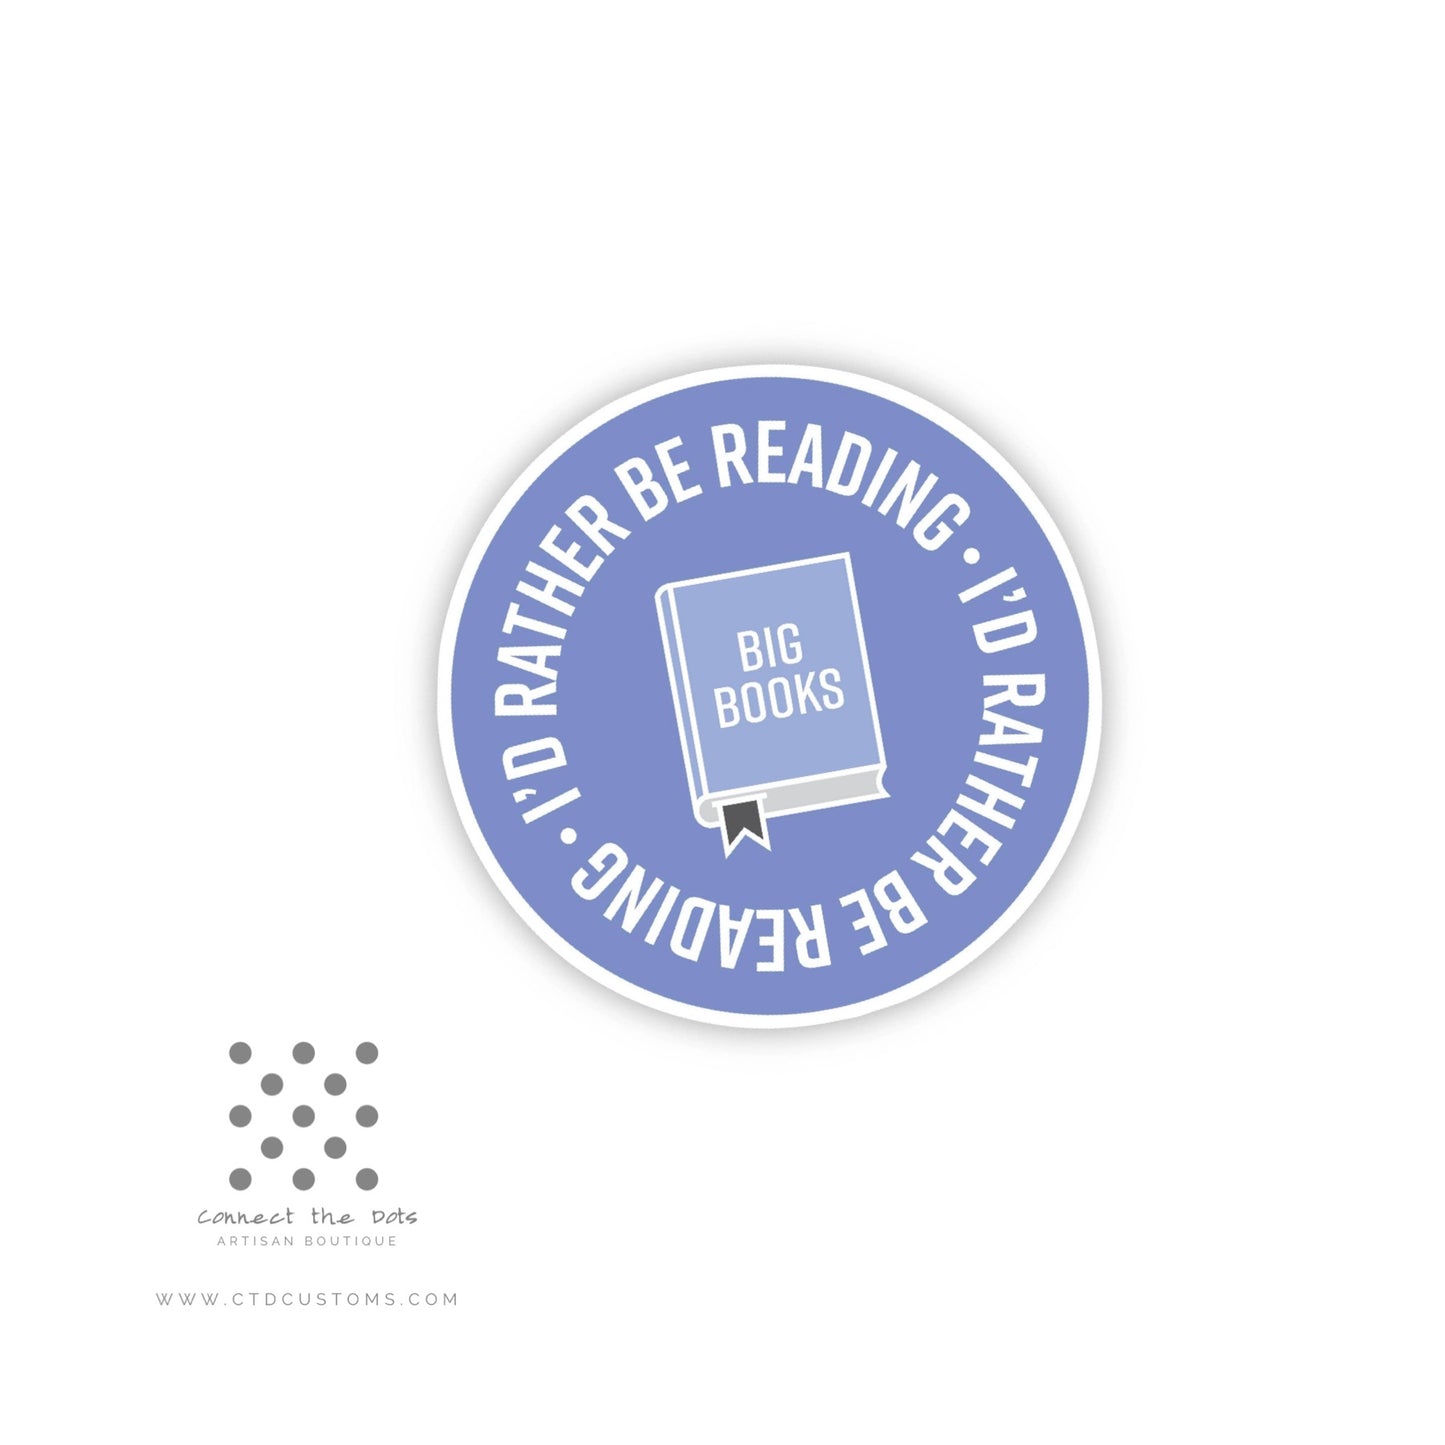 I’d Rather Be Reading Big Books Vinyl Sticker